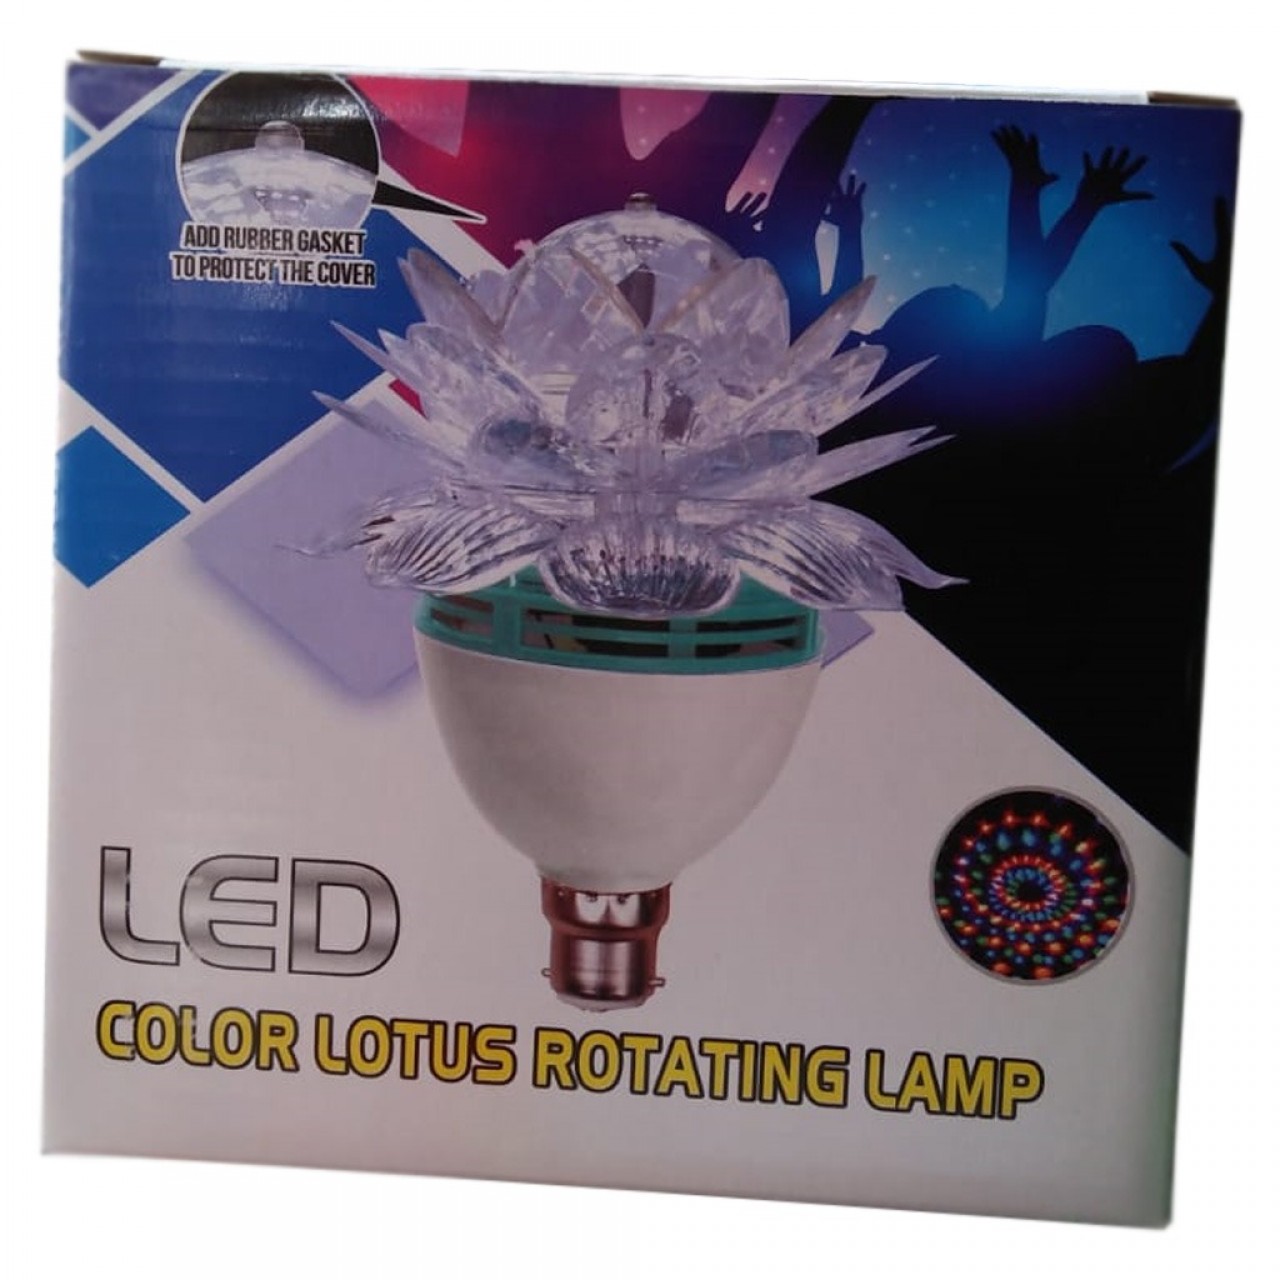 LED Colour Lotus Rotating Lamp - Multicolour Light